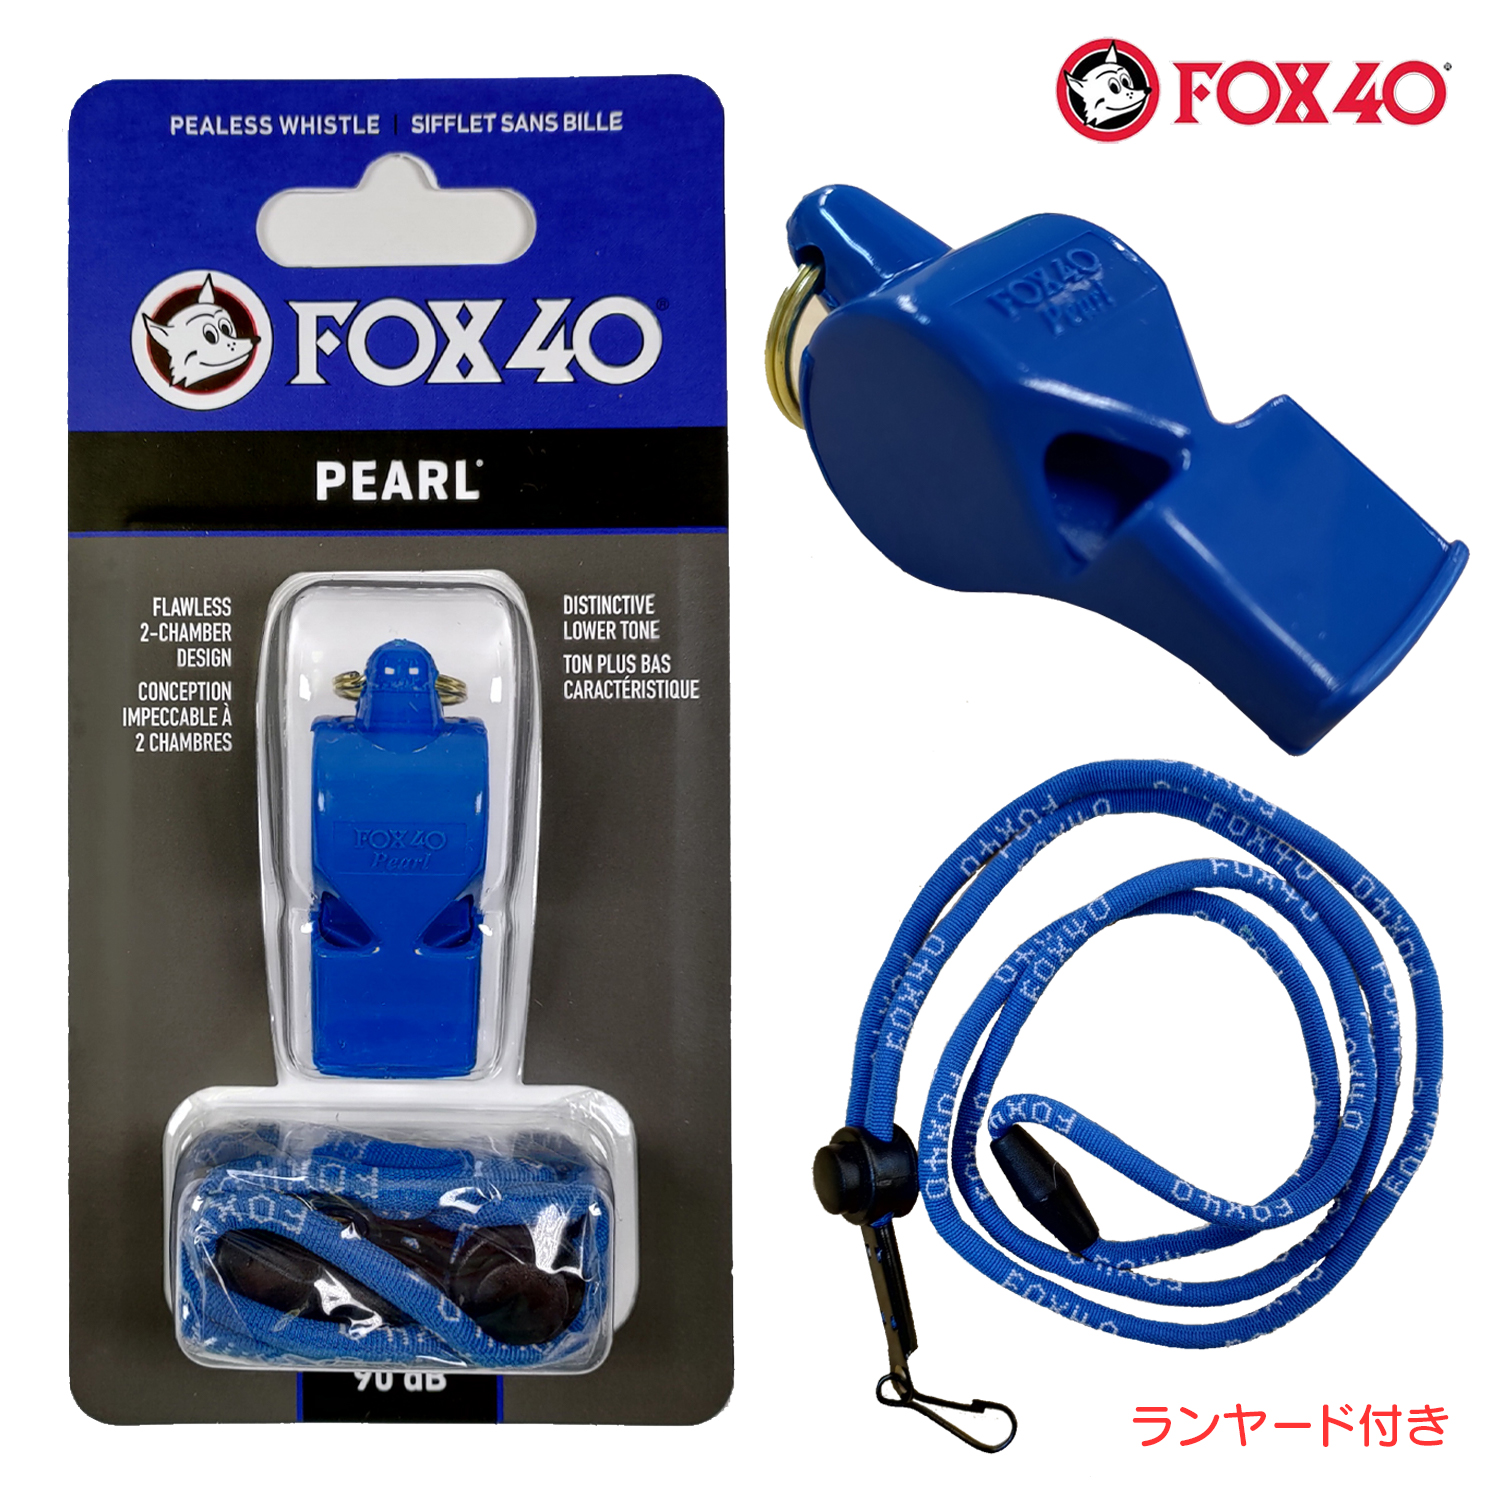 FOX40 フォックス40 Pearl ホイッスル 審判用 90db 色:ブルー ランヤード付属 コルク玉不使用ピーレスタイプ made in Canada